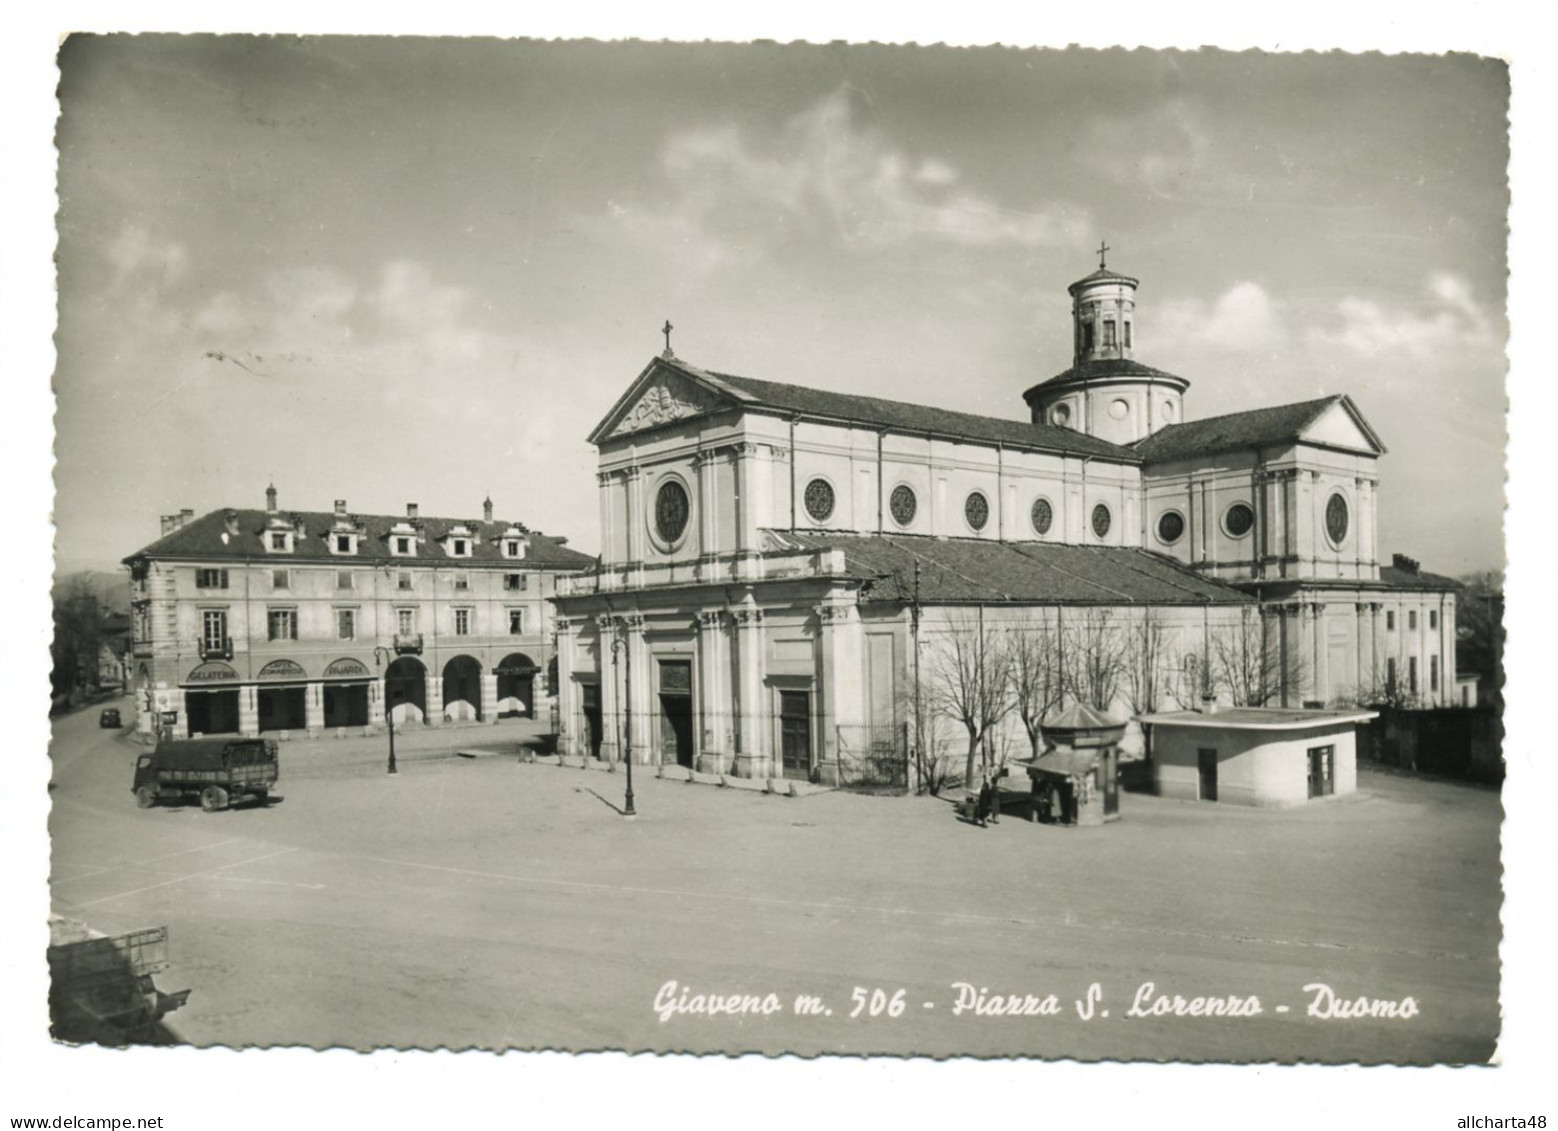 D2191] GIAVENO Torino PIAZZA SAN LORENZO - DUOMO Camion Viaggiata 1958 - Mehransichten, Panoramakarten